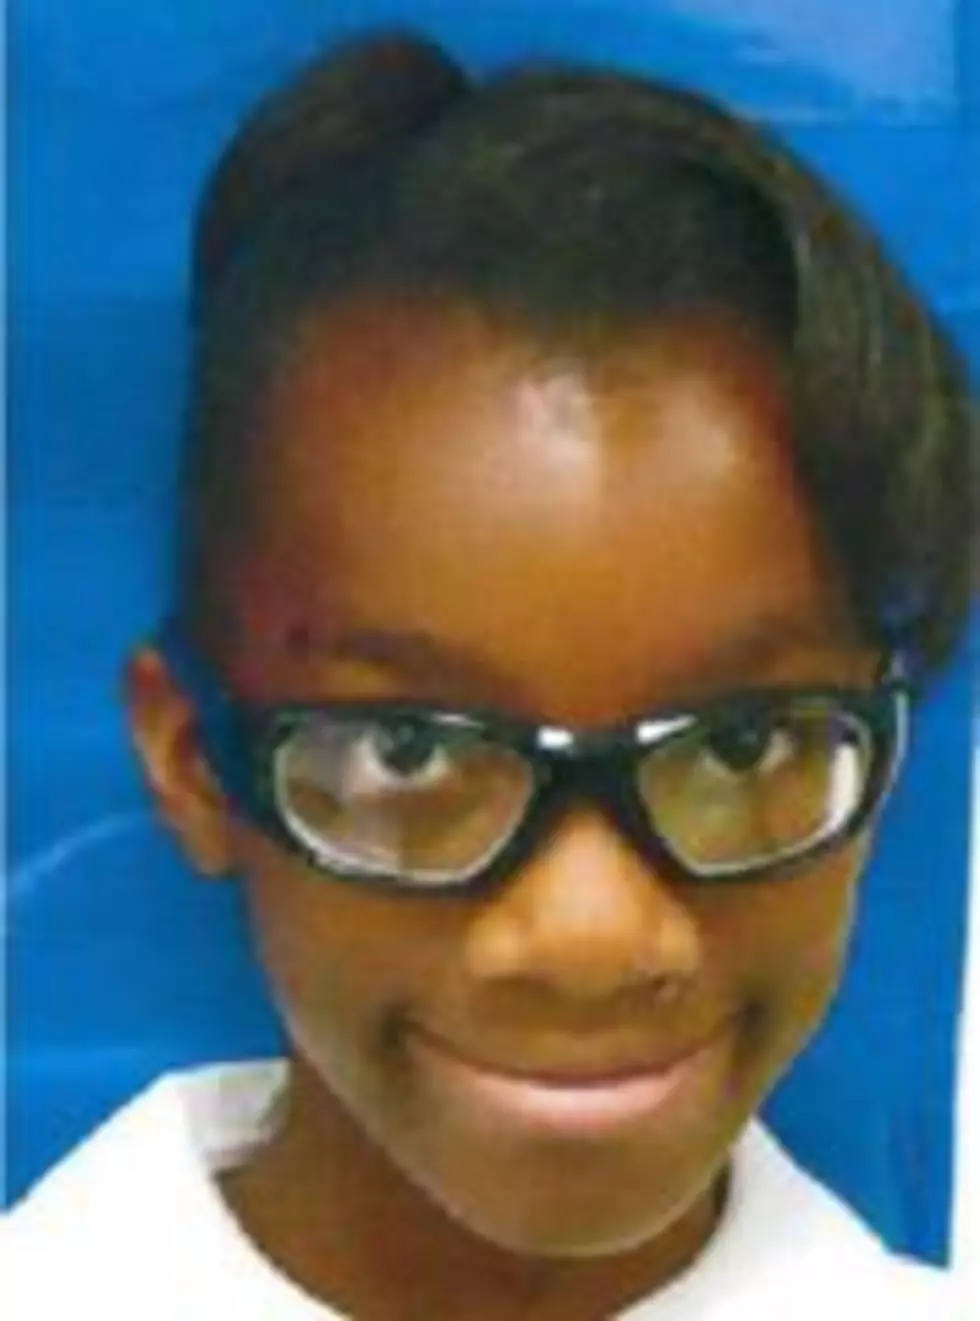 Missing Child Alert: 10-Year-Old Girl Missing